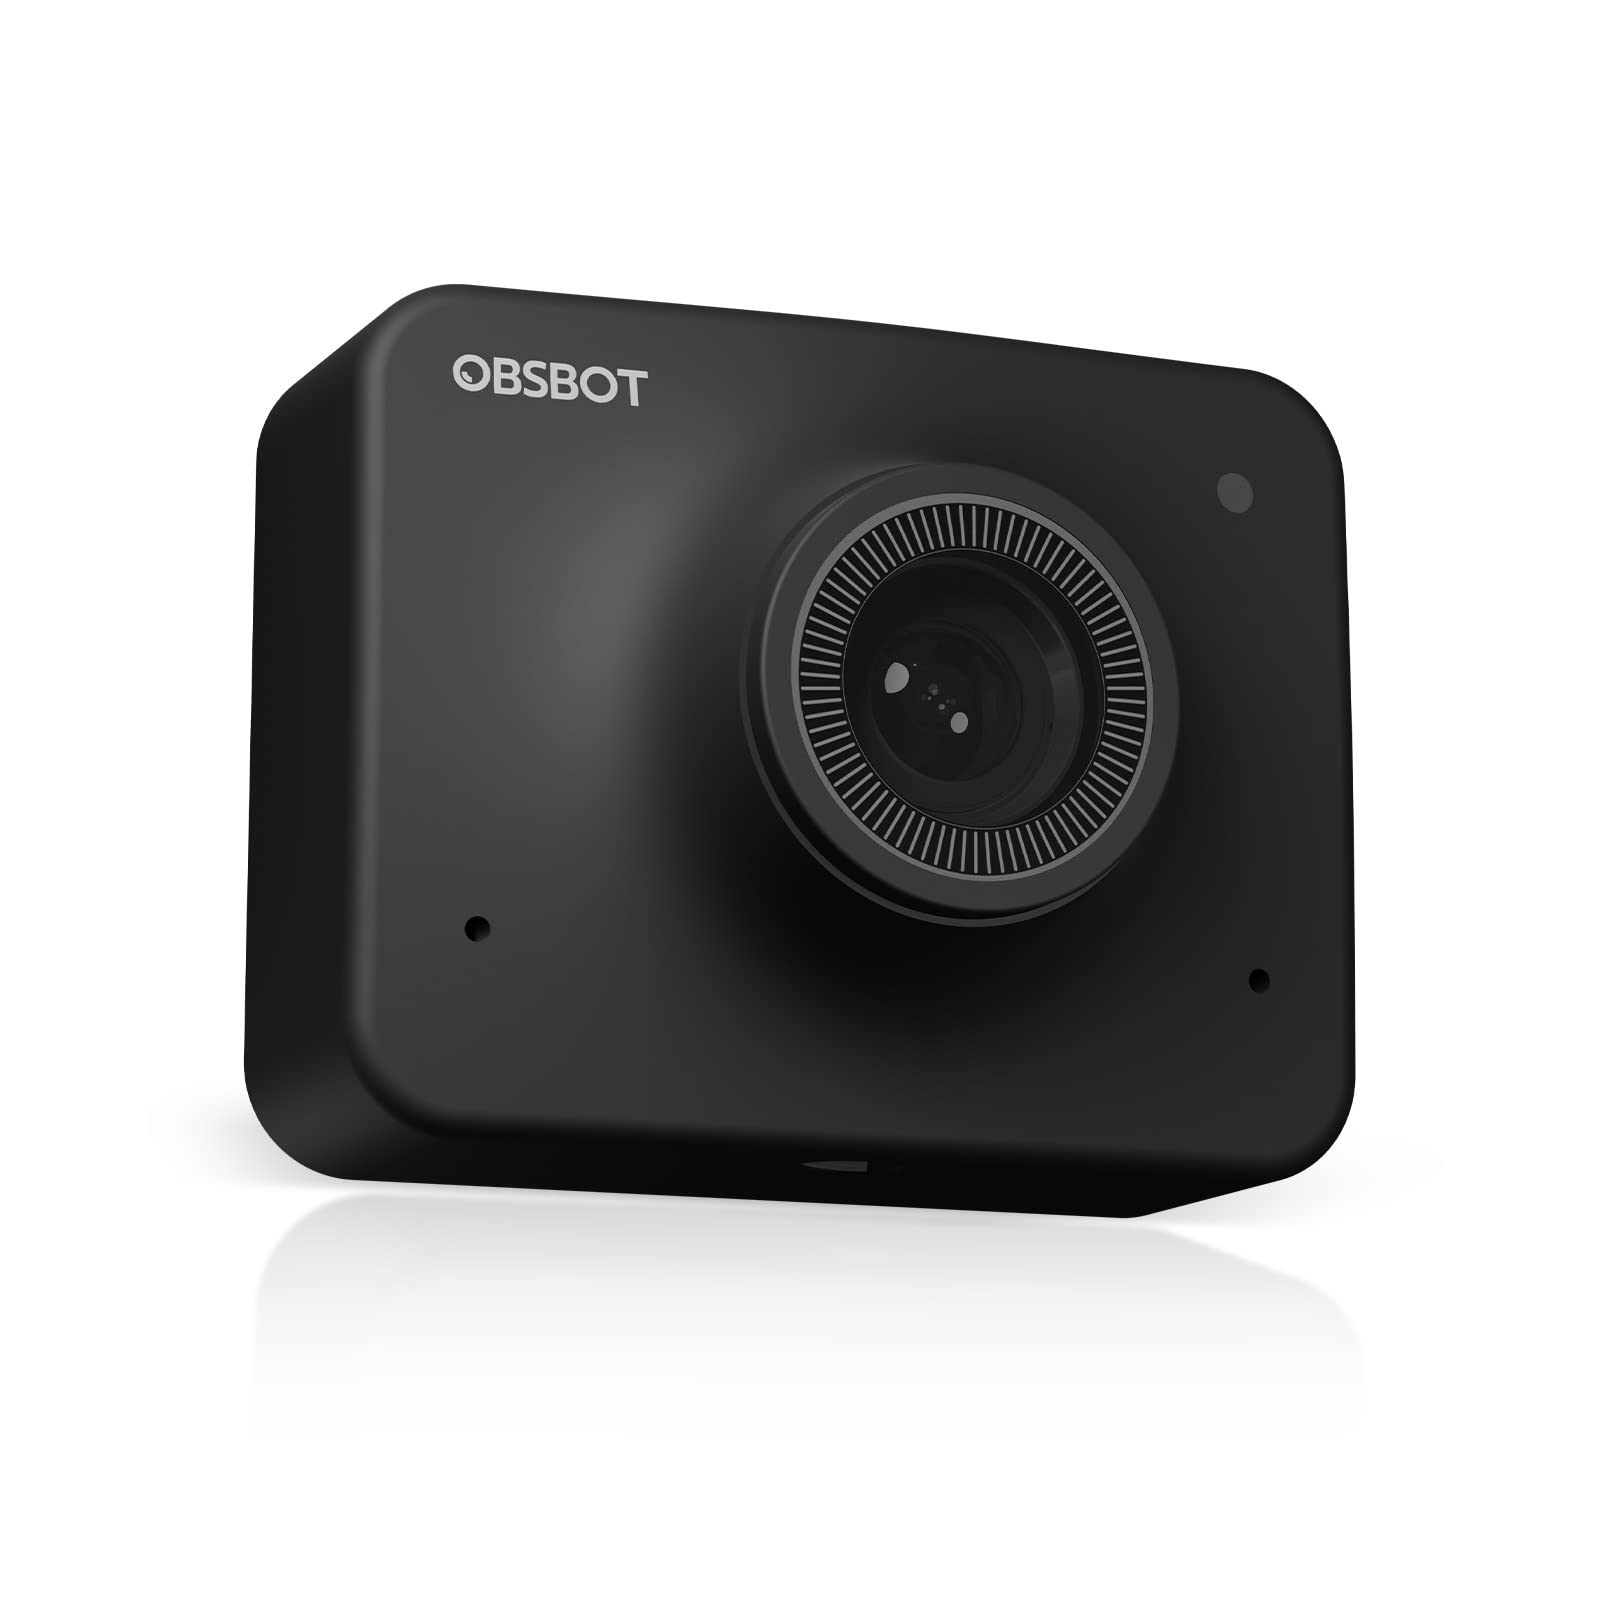 OBSBOT 认识网络摄像头 1080P 超高清 AI 供电网络摄像头 1080P 视频会议摄像机，具有 AI 自动取景、自动对焦 HDR 和 2 倍数字变焦功能